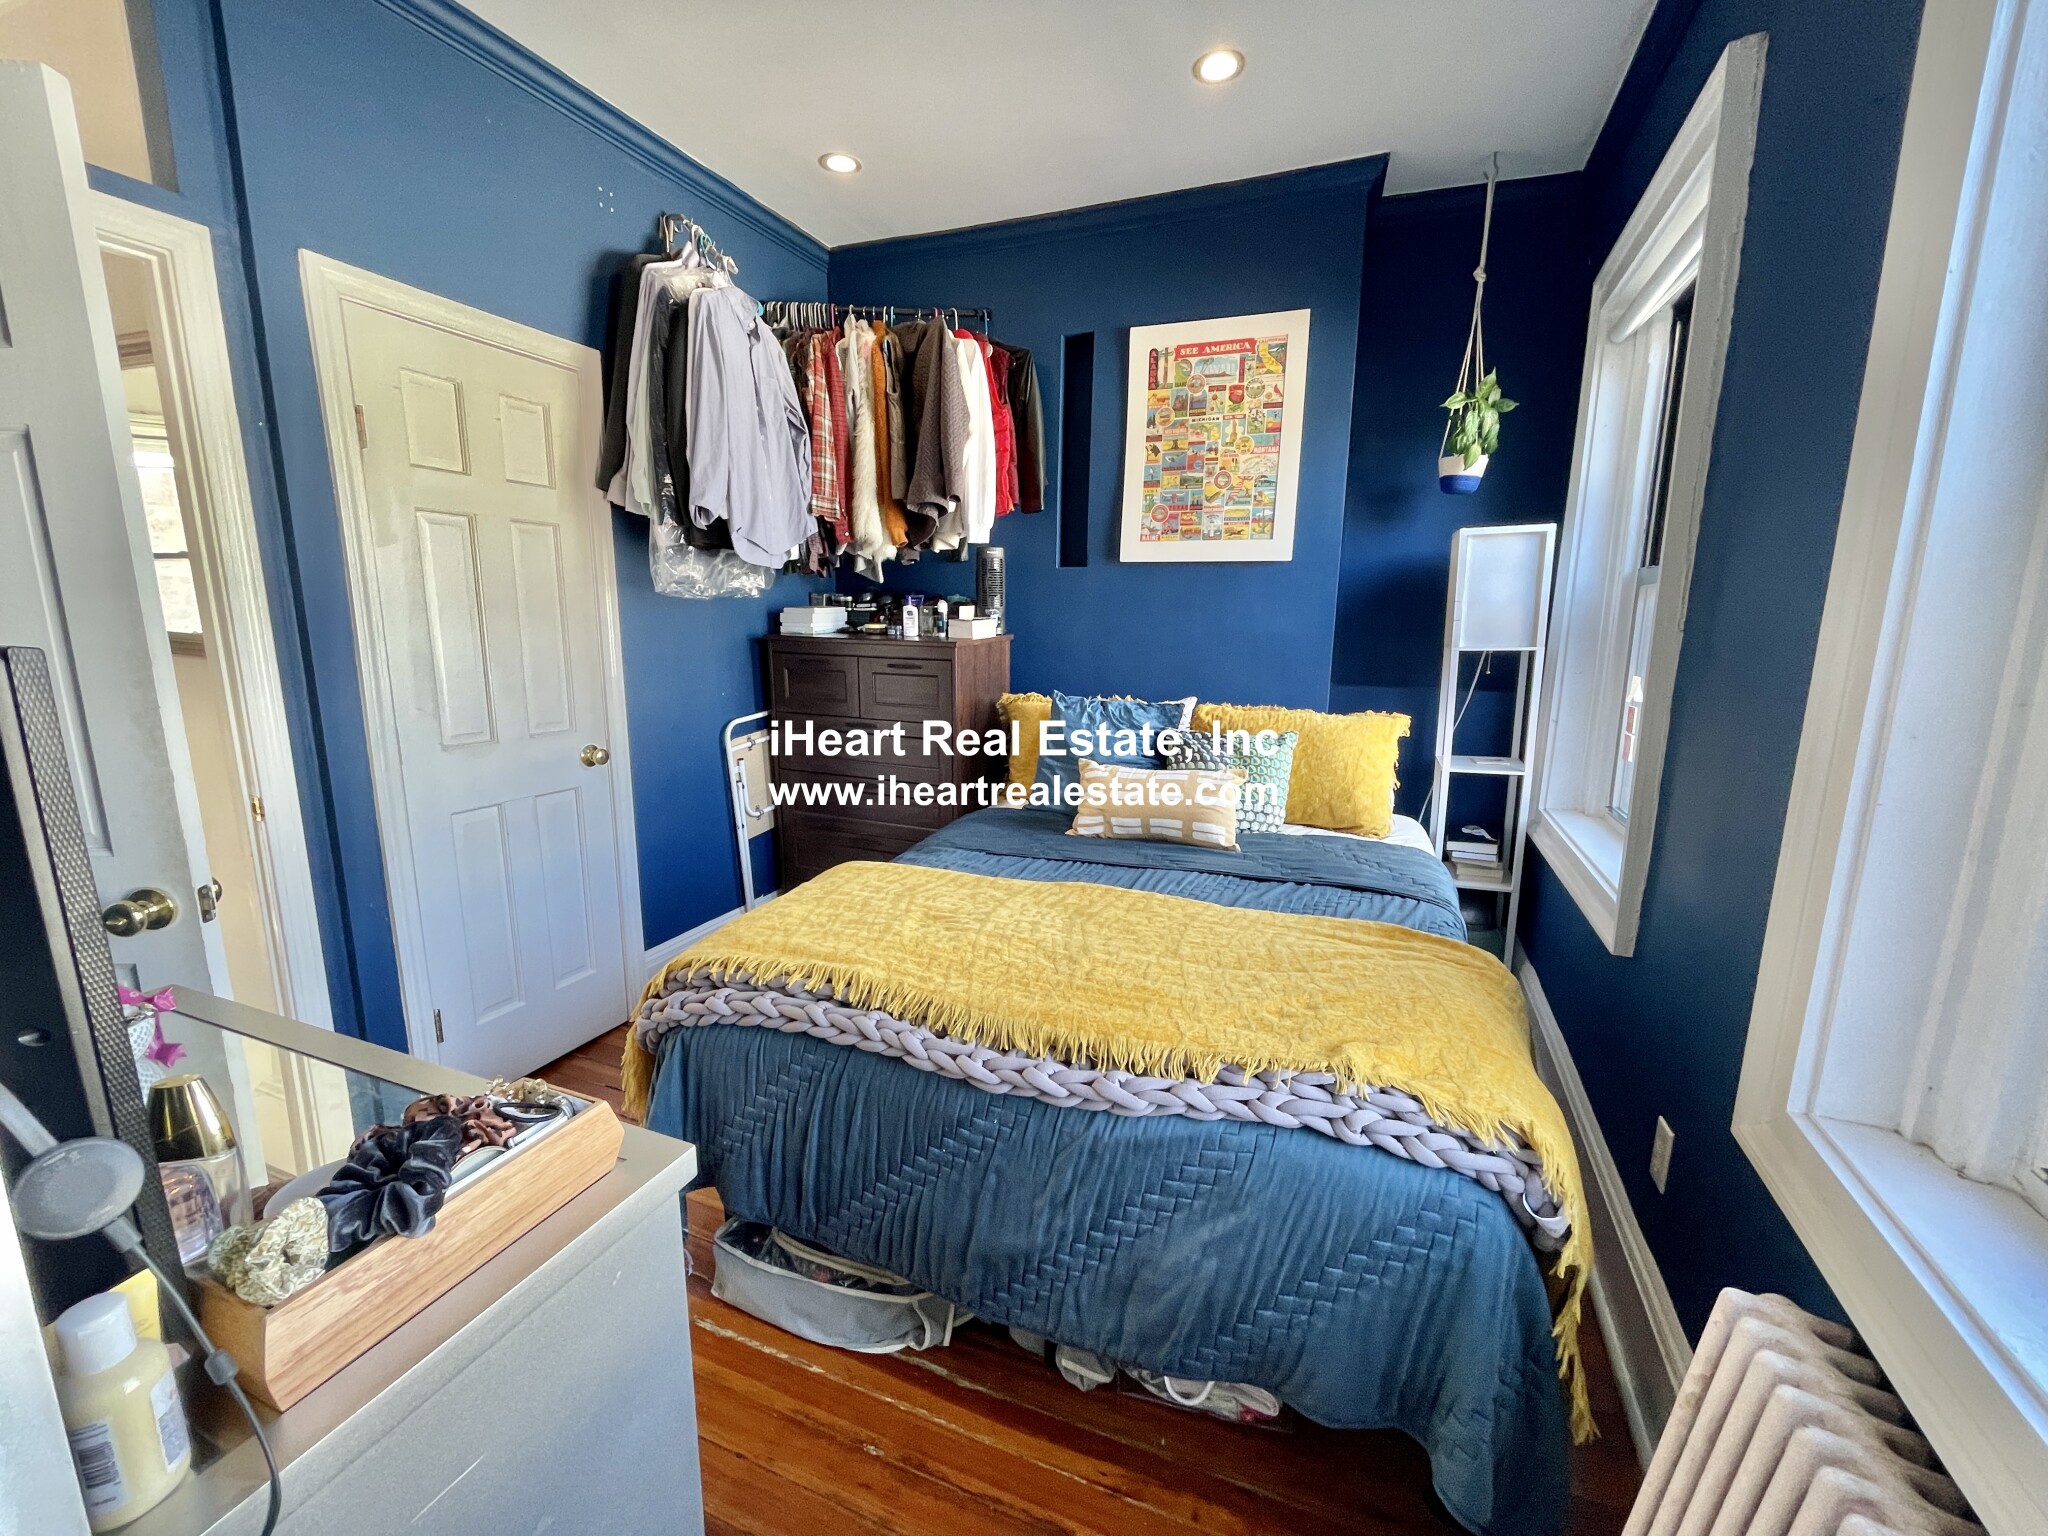 Photos of apartment on Phillips,Boston MA 02114